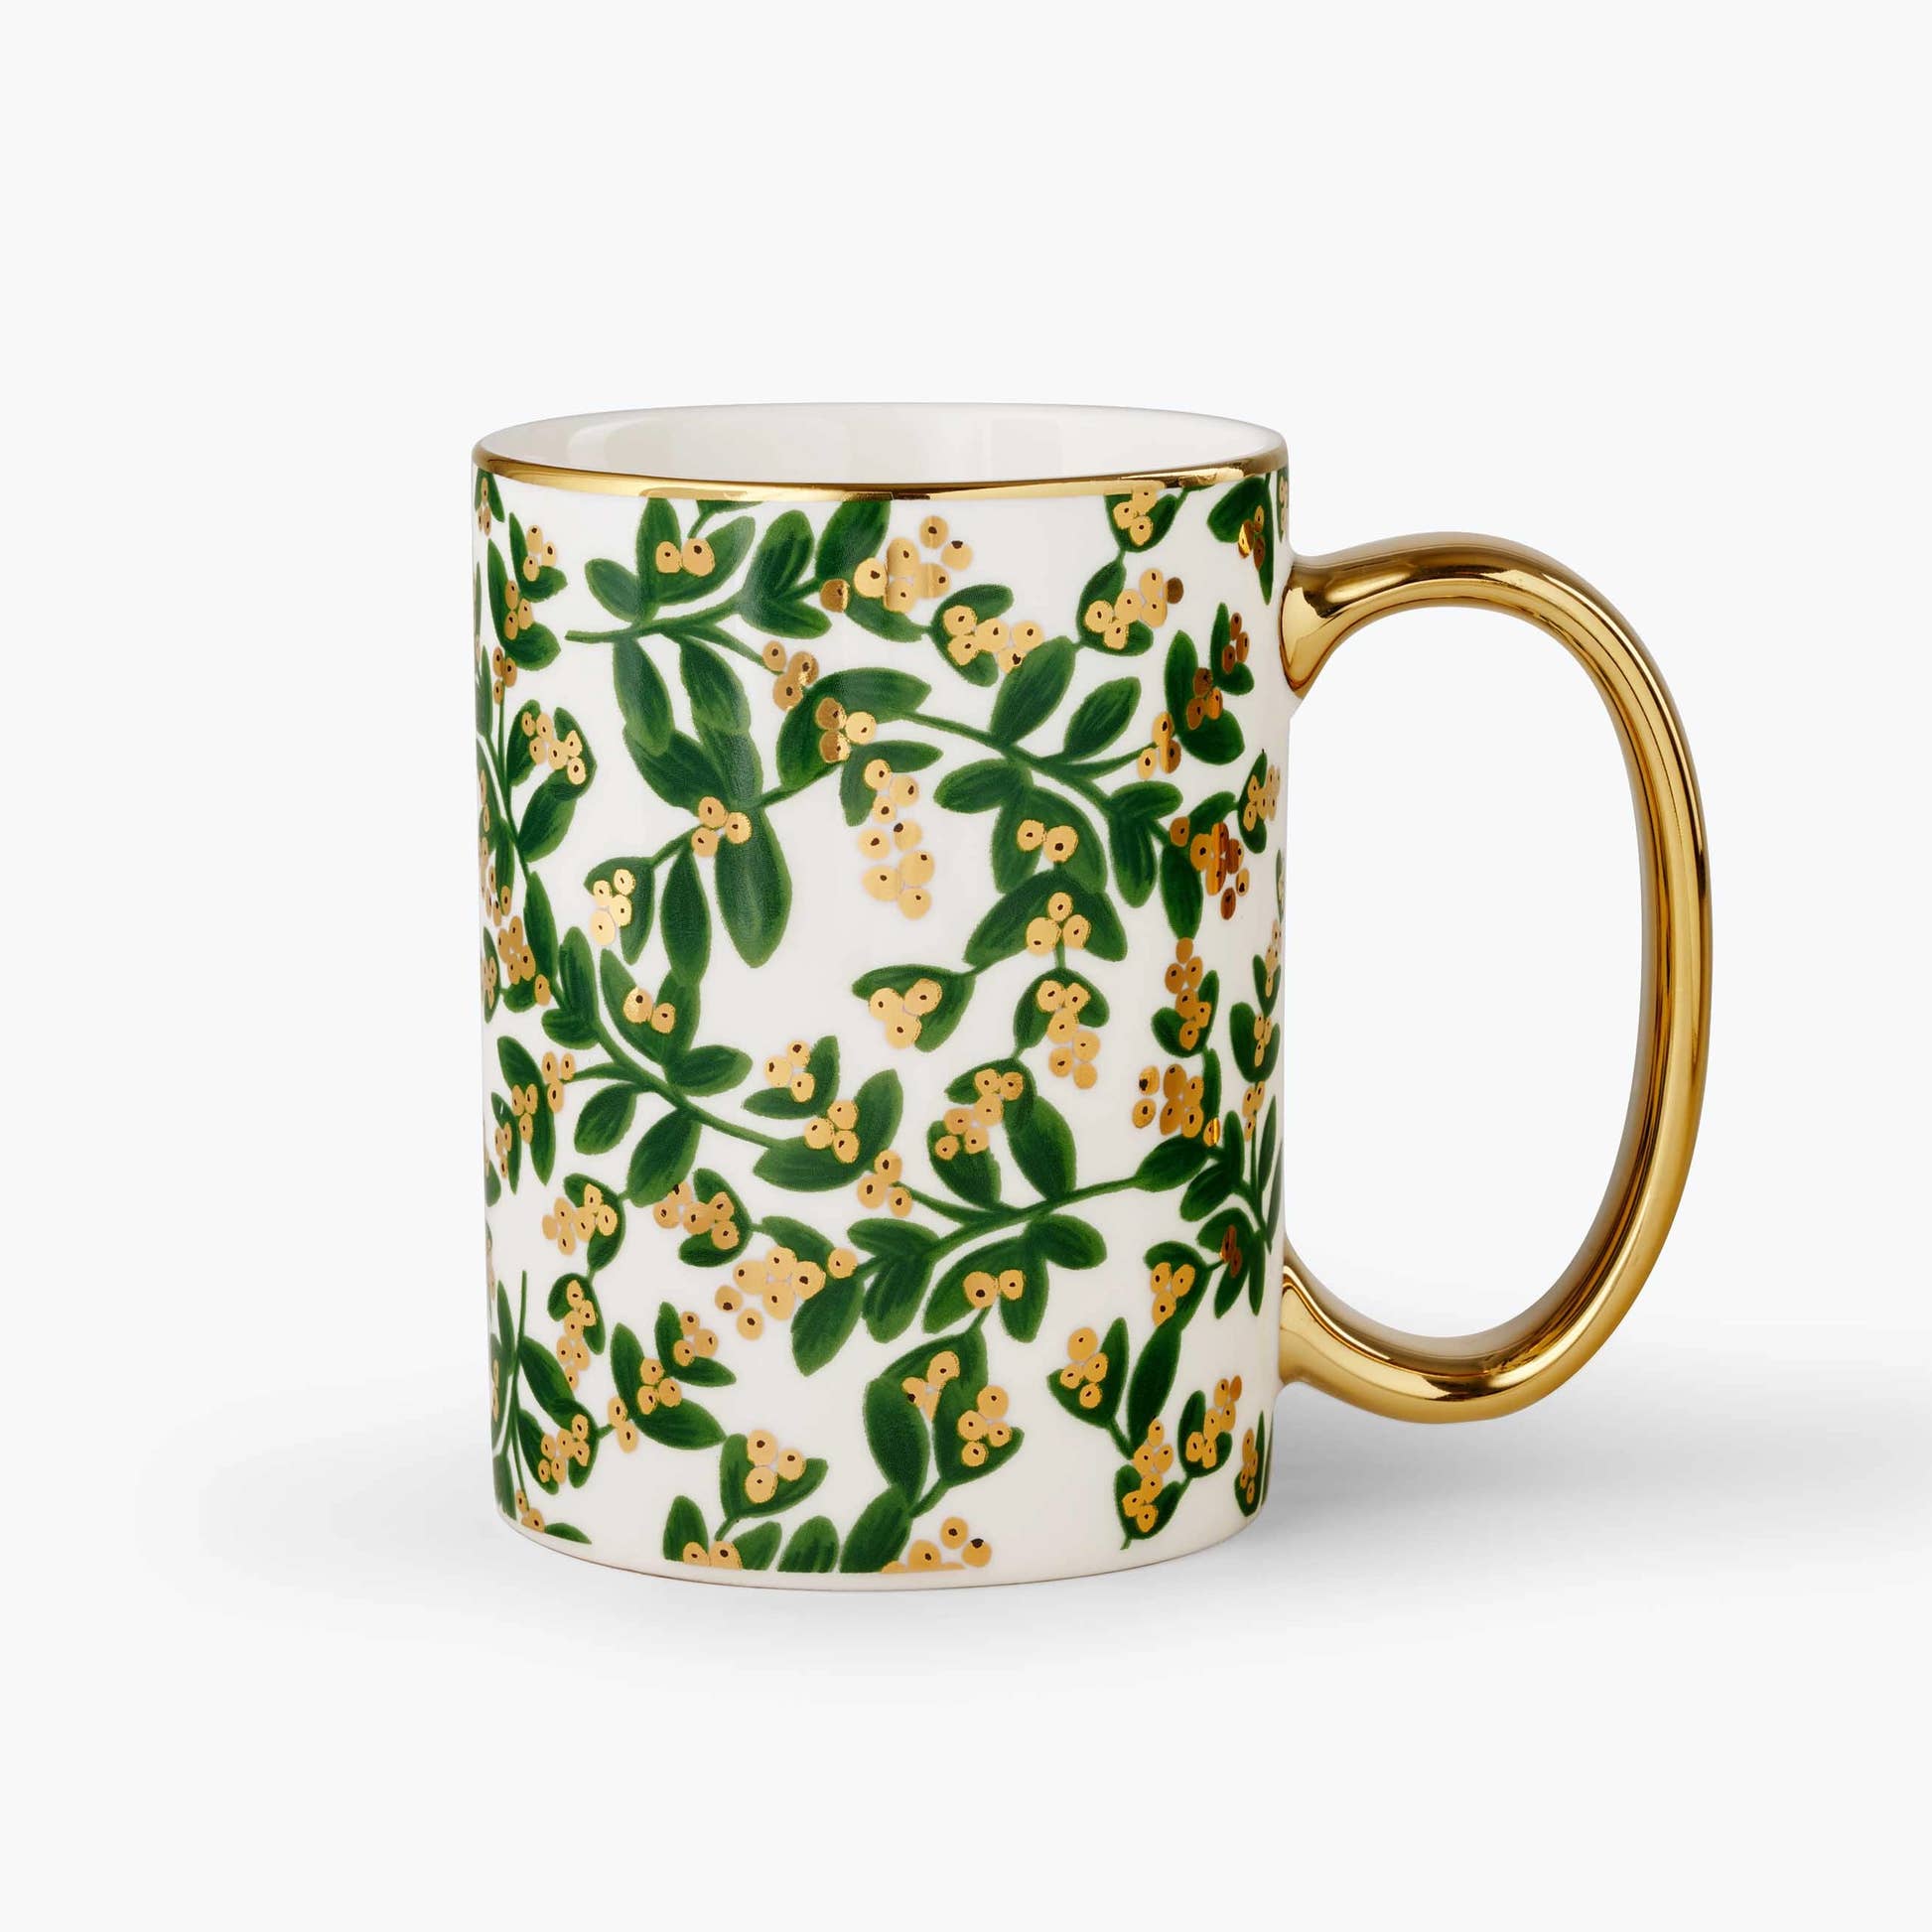 Mistletoe Porcelain Mug - Rifle Paper Co. at Sips by